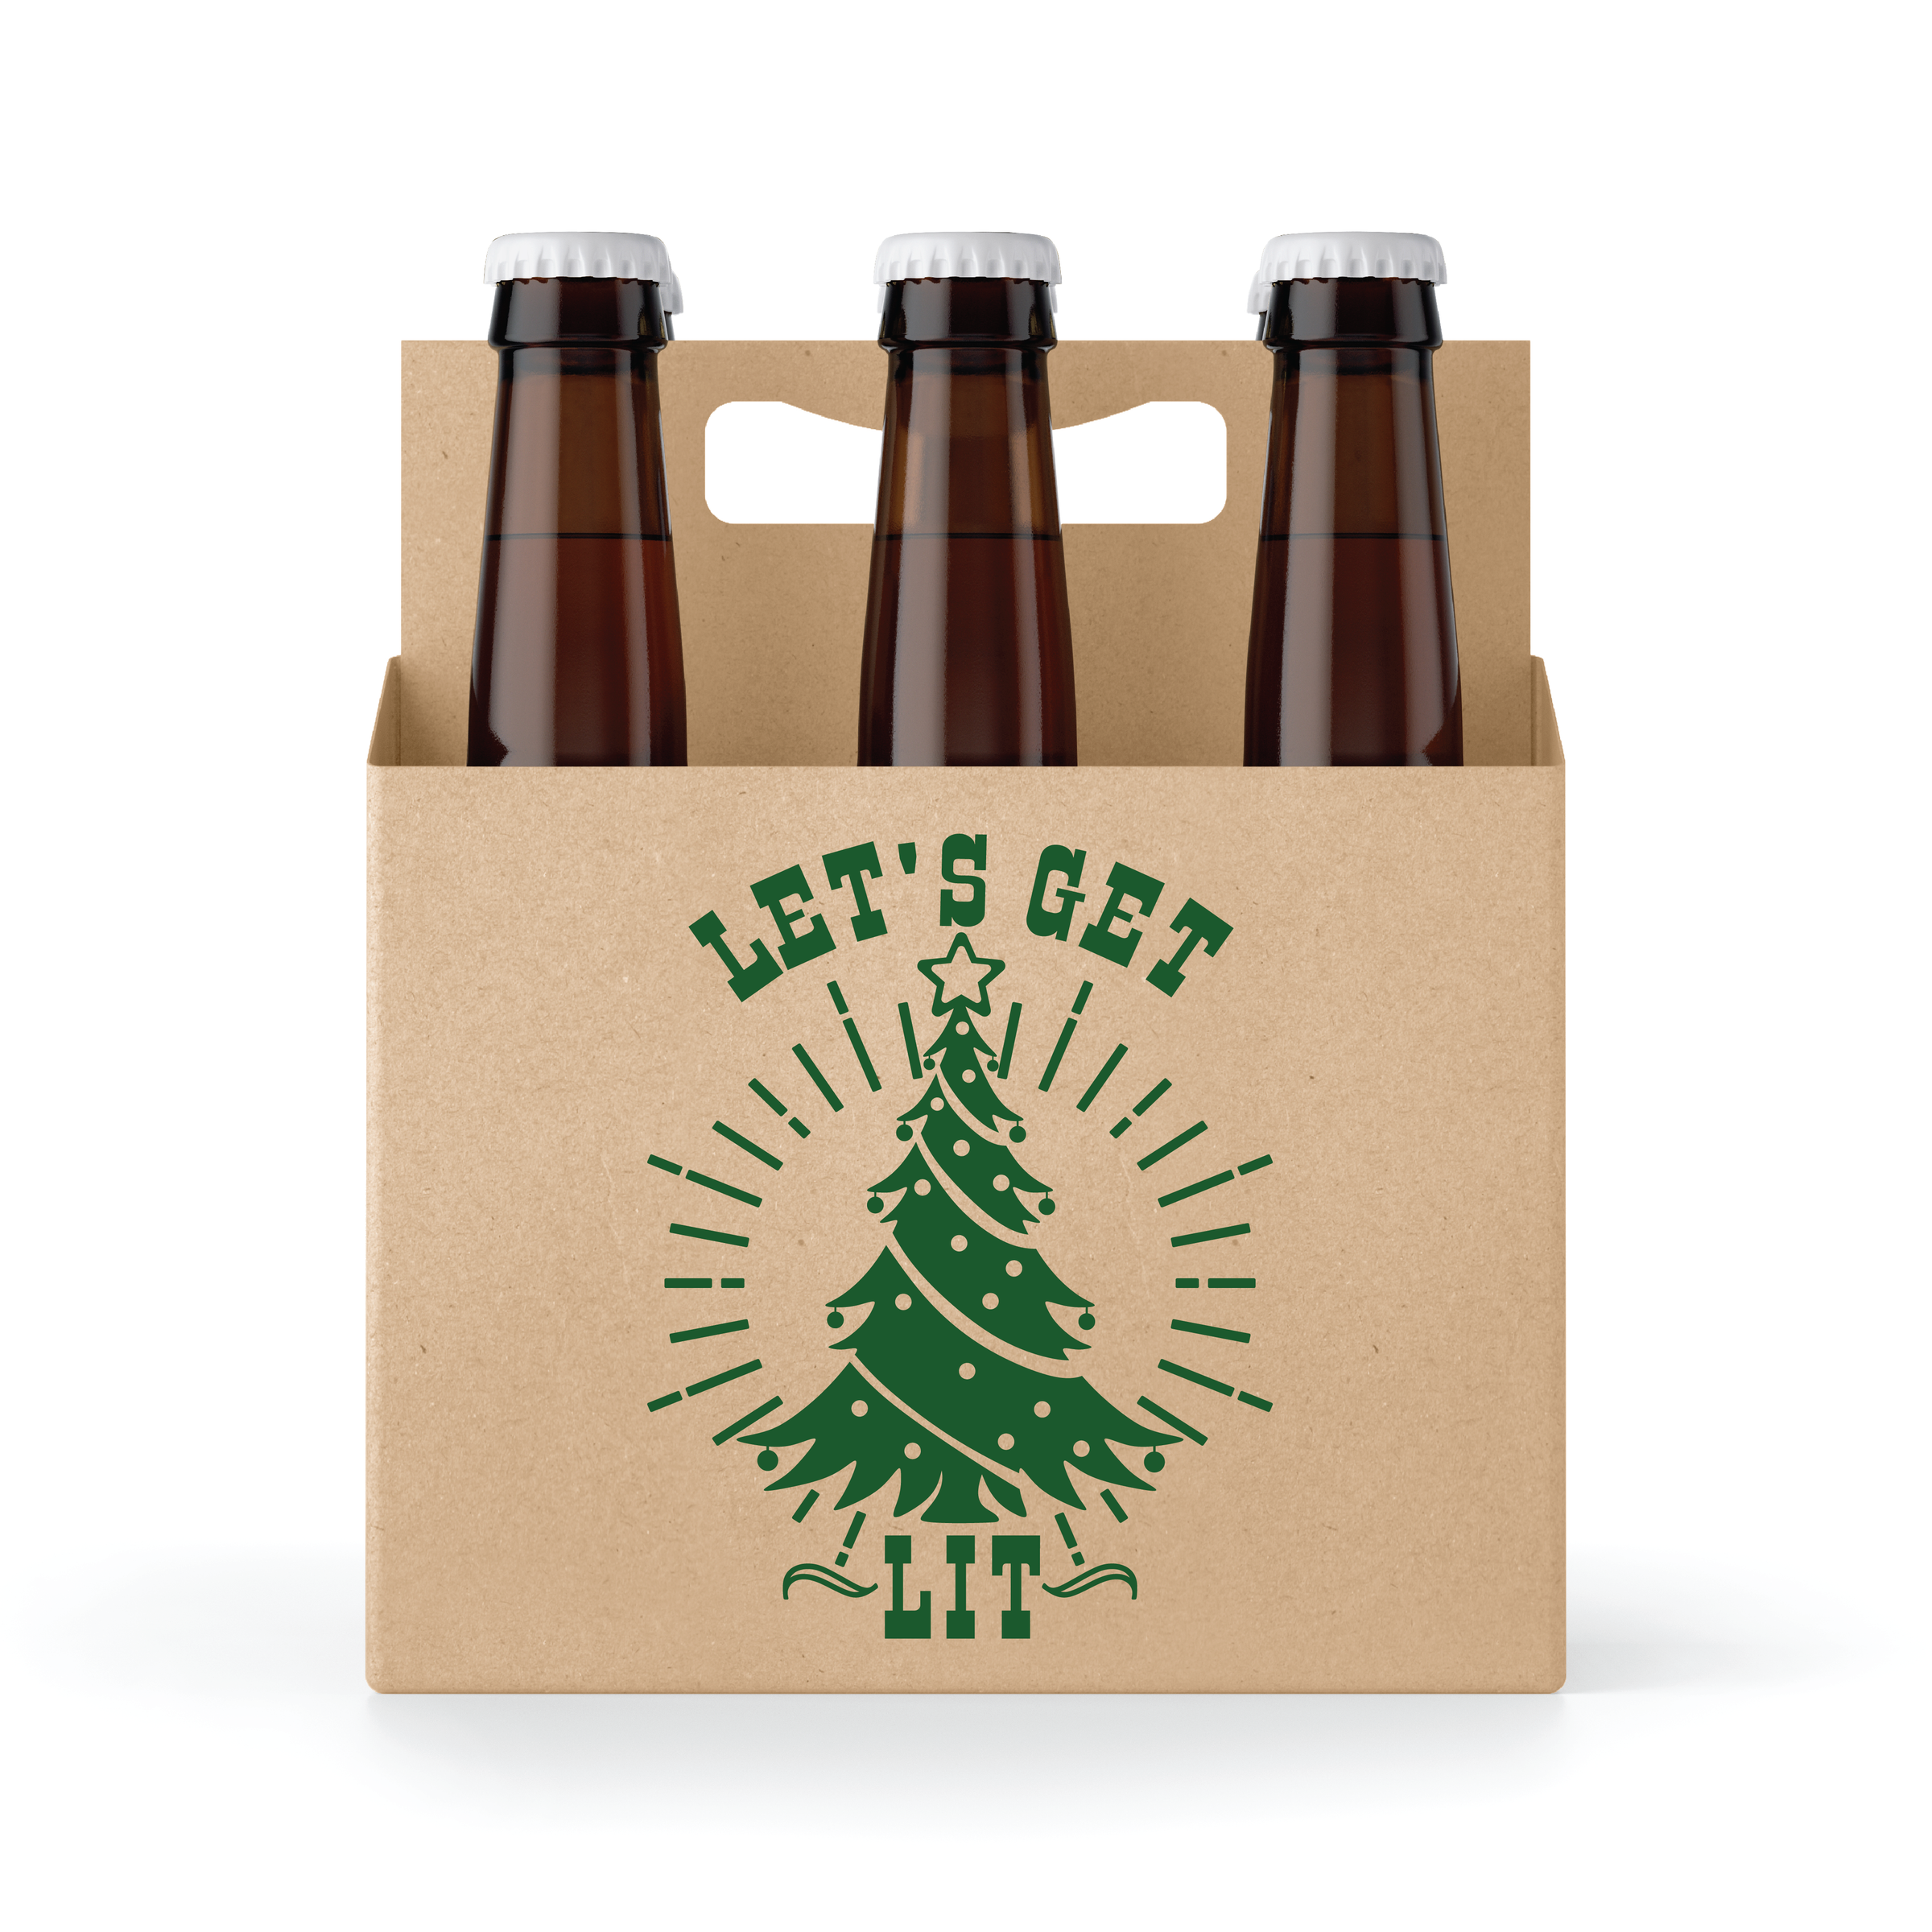 Let's Get Lit Custom Christmas Beer Labels